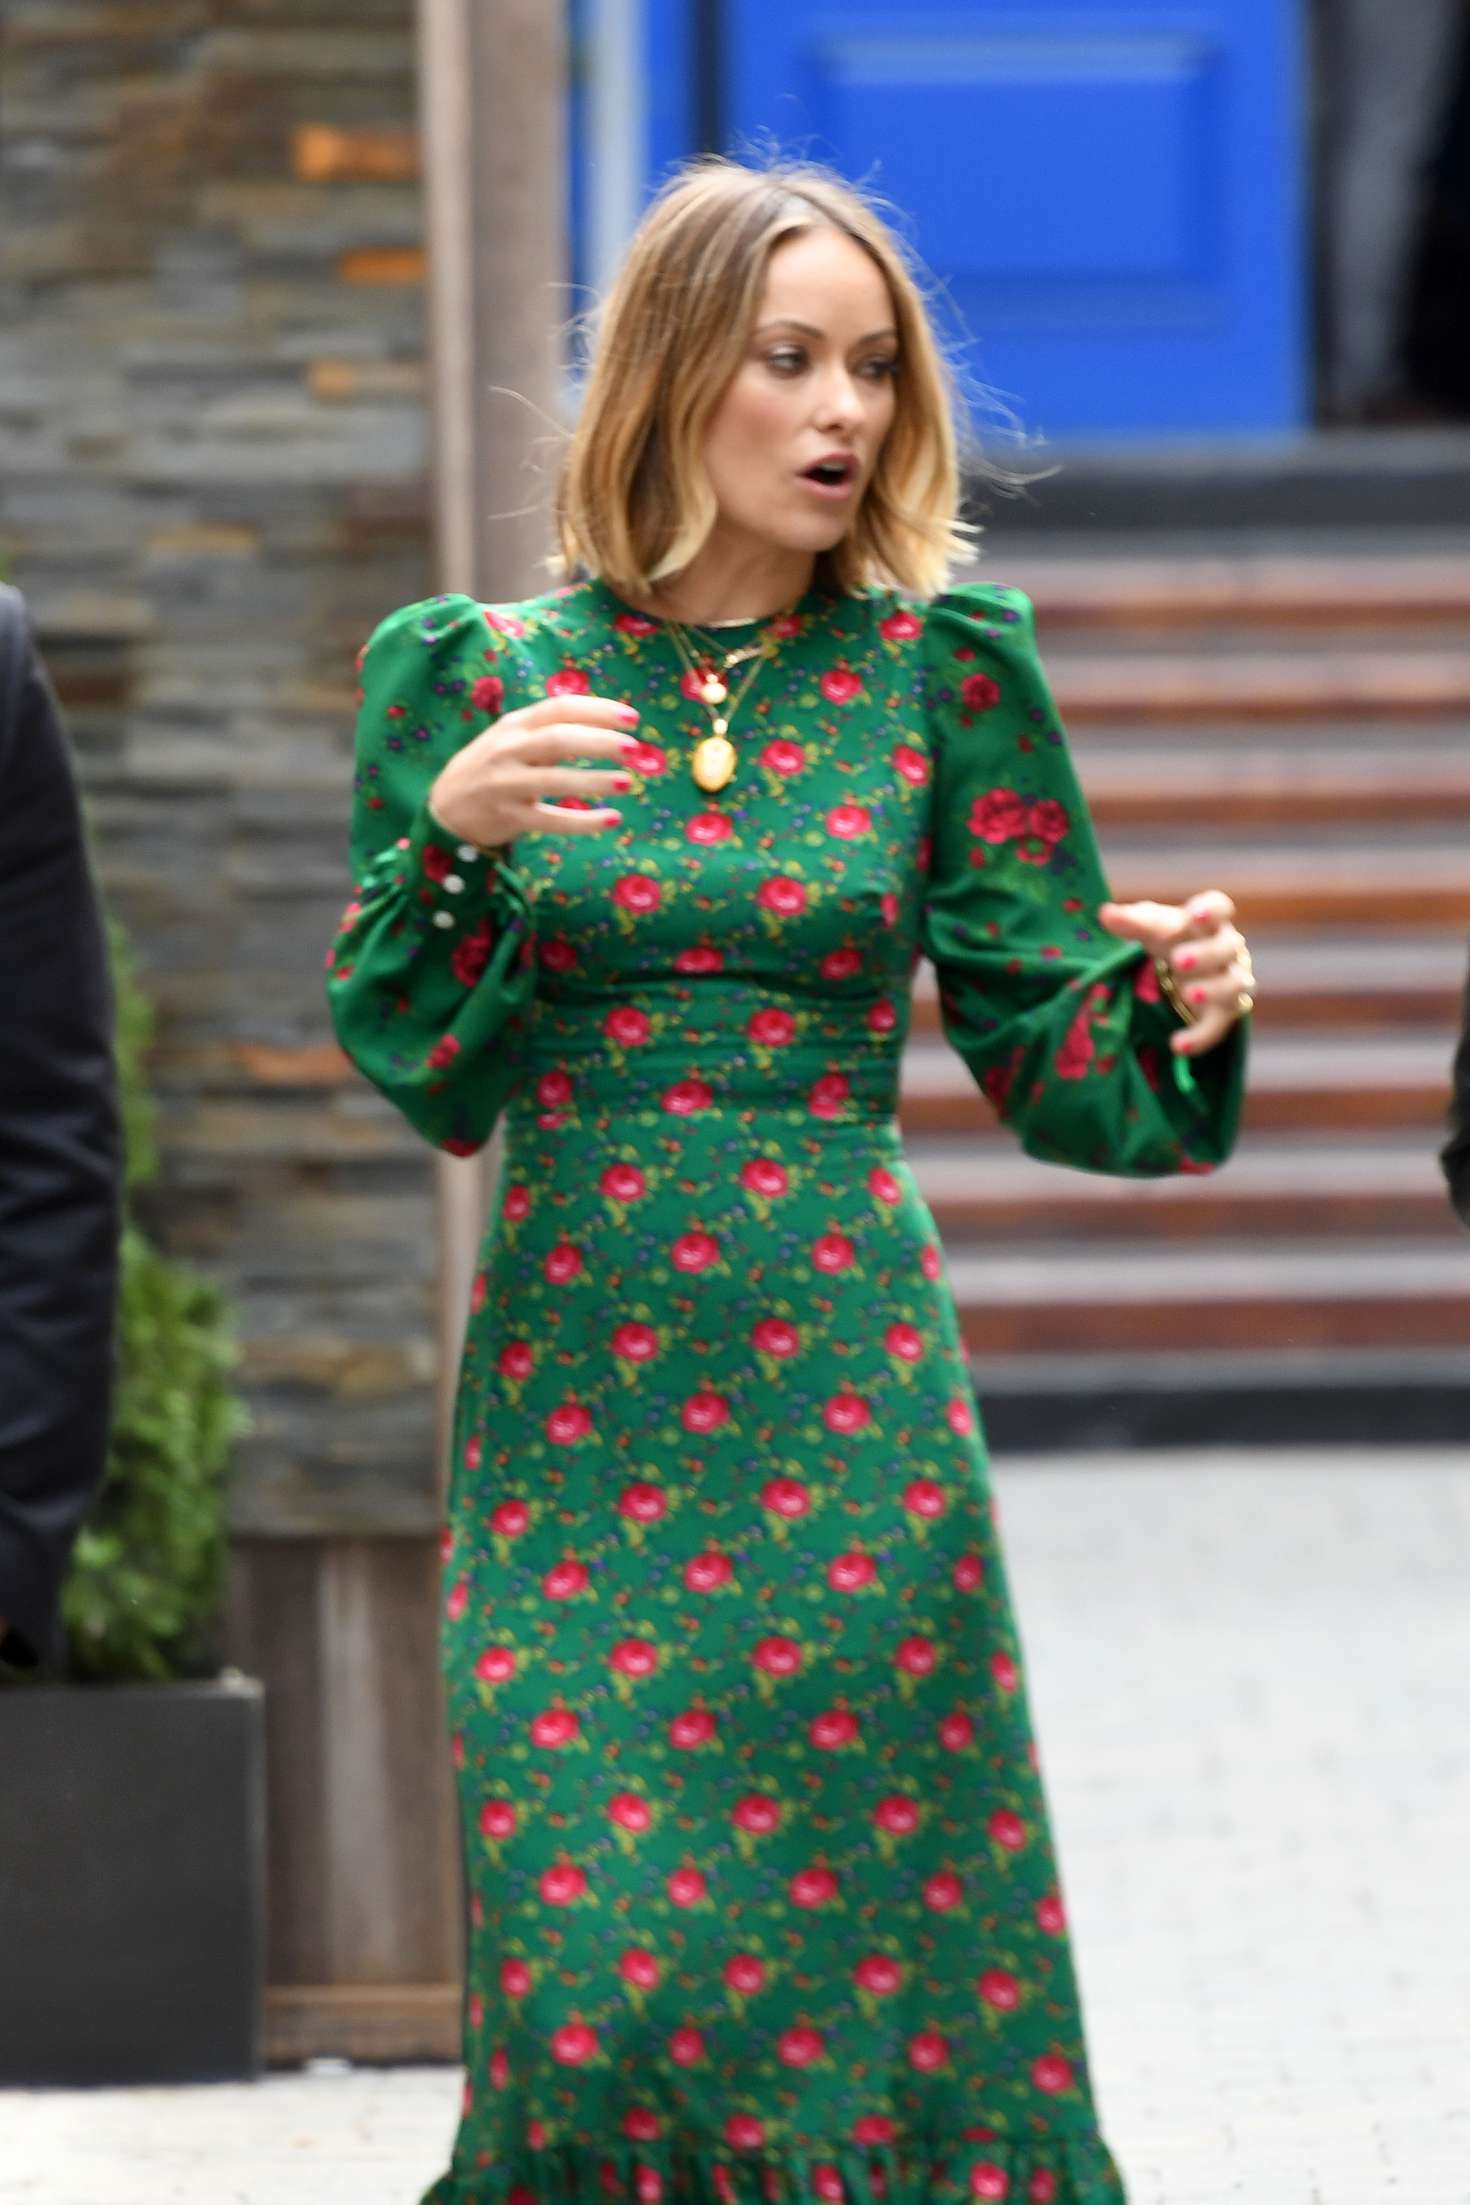 Olivia Wilde in Long Flowing Green Dress â€“ Out in Toronto